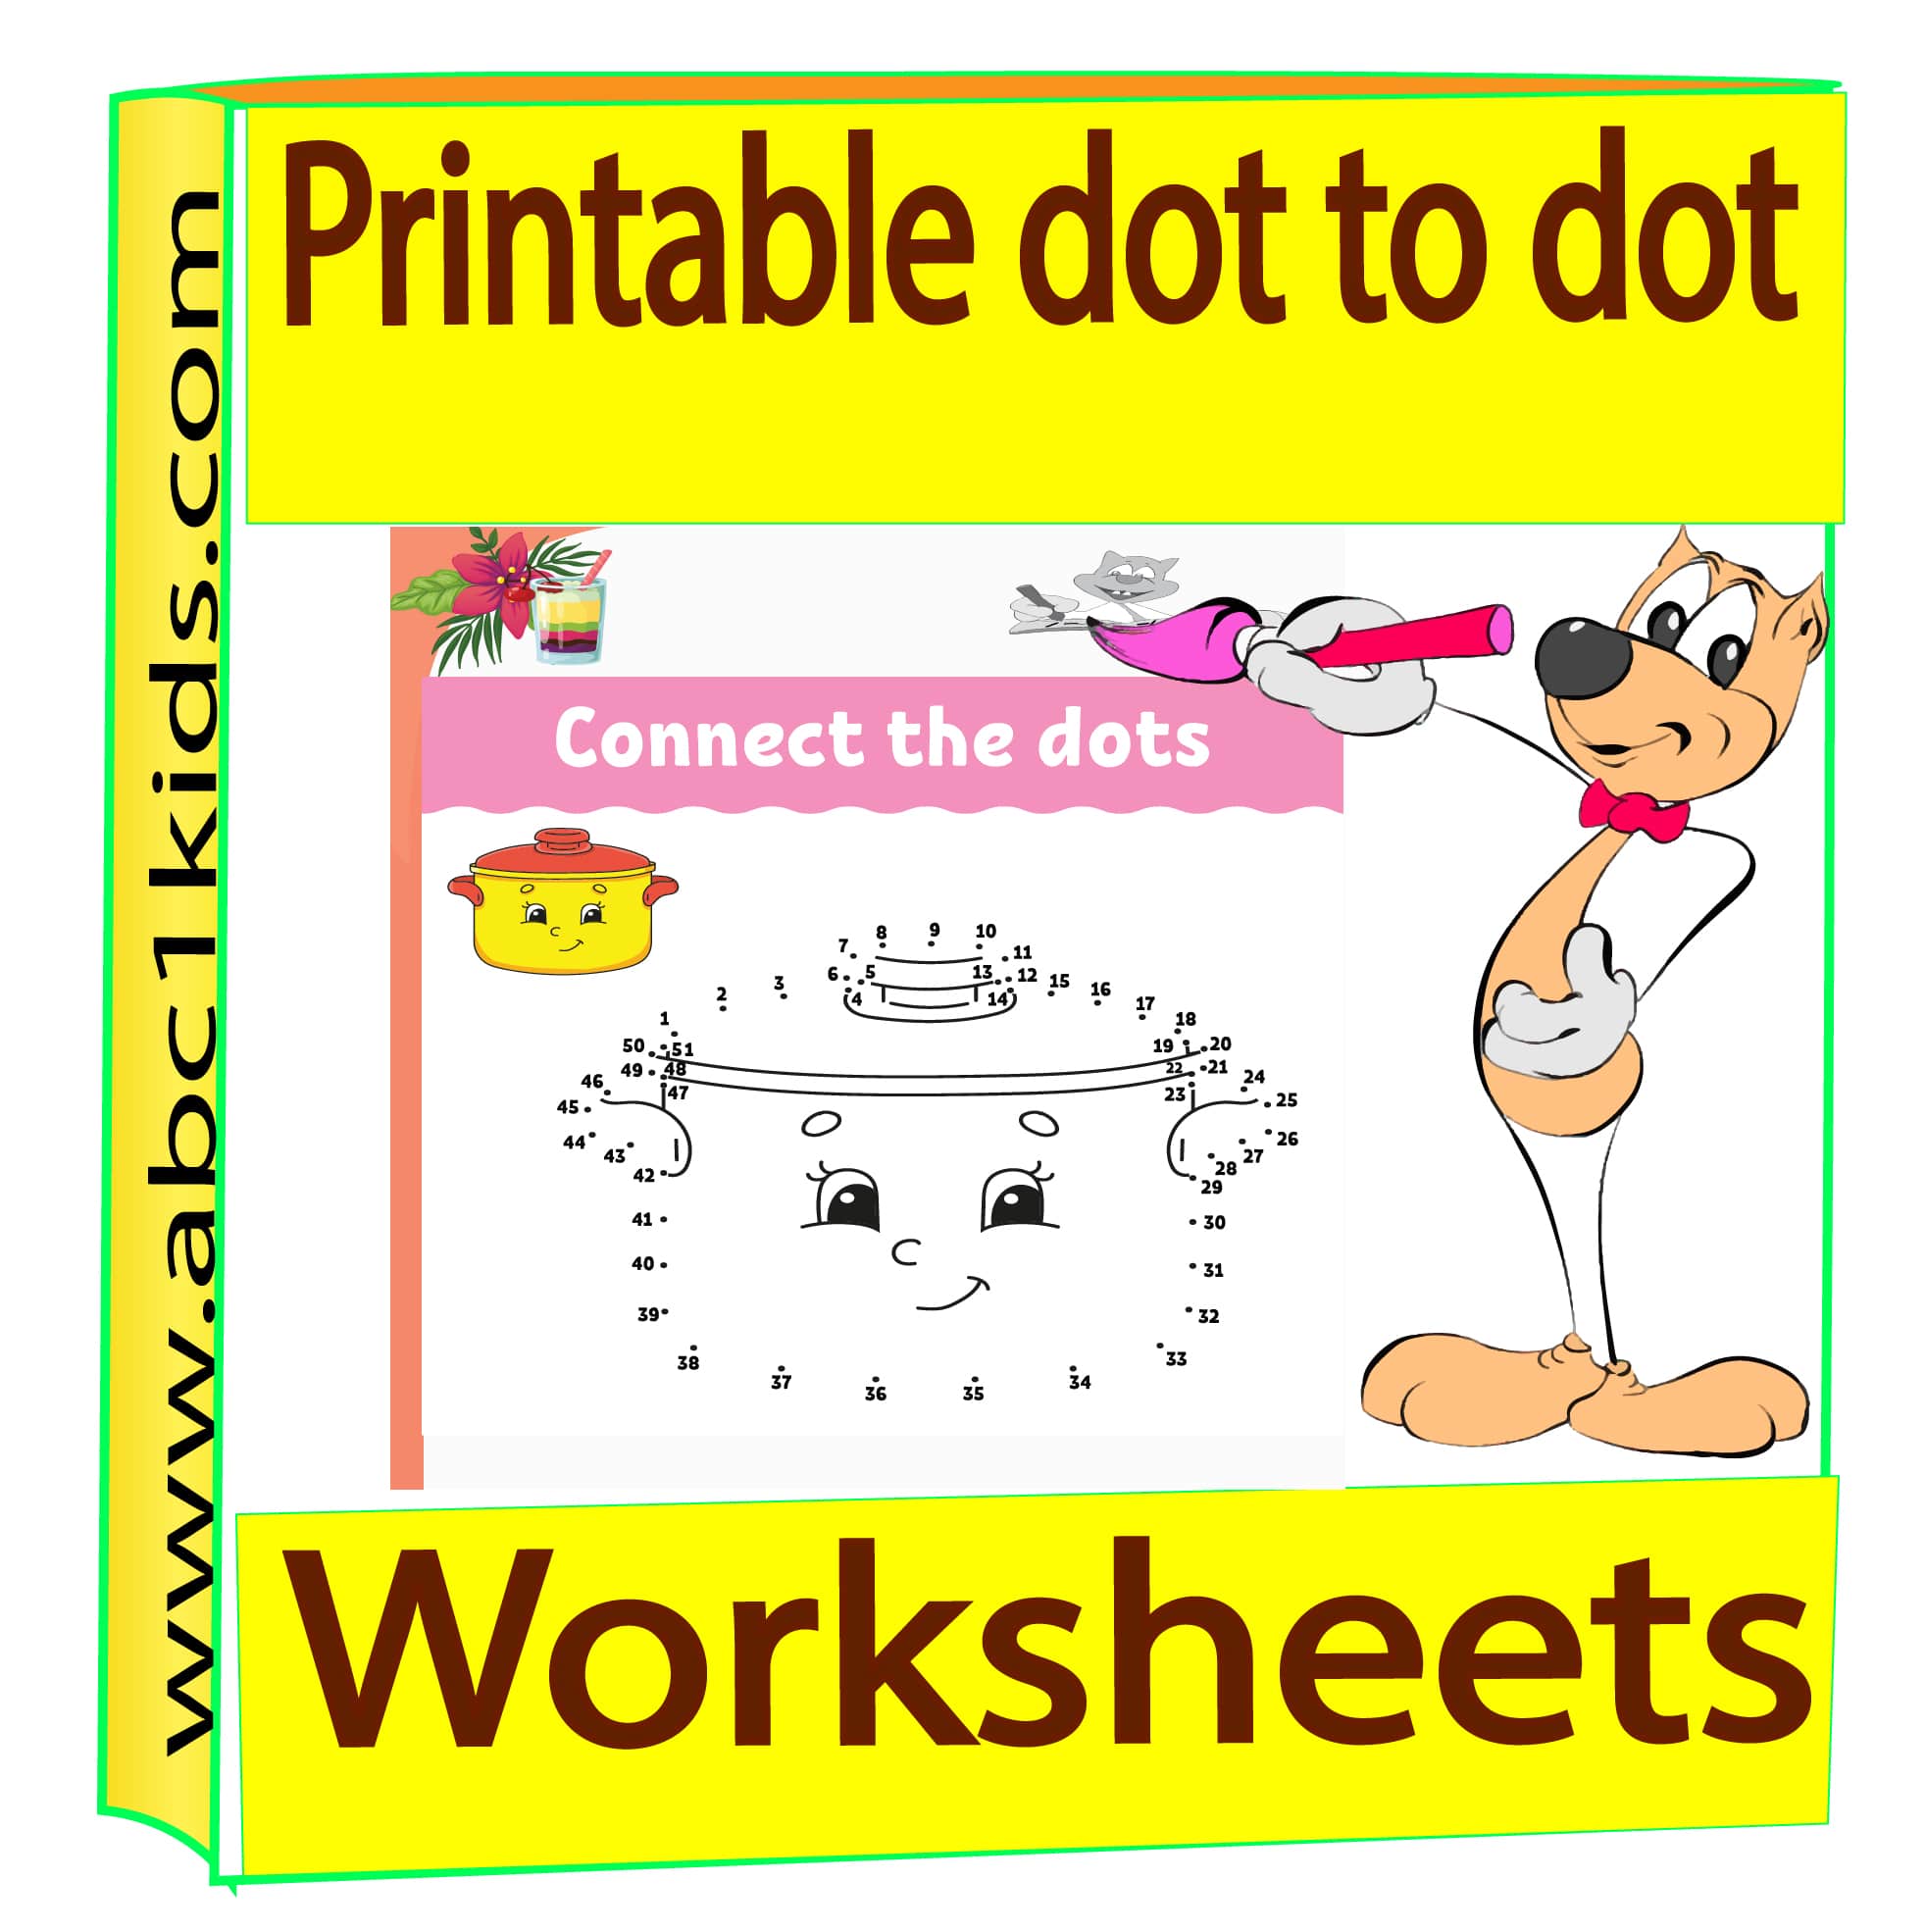 Printable dot to dot worksheets